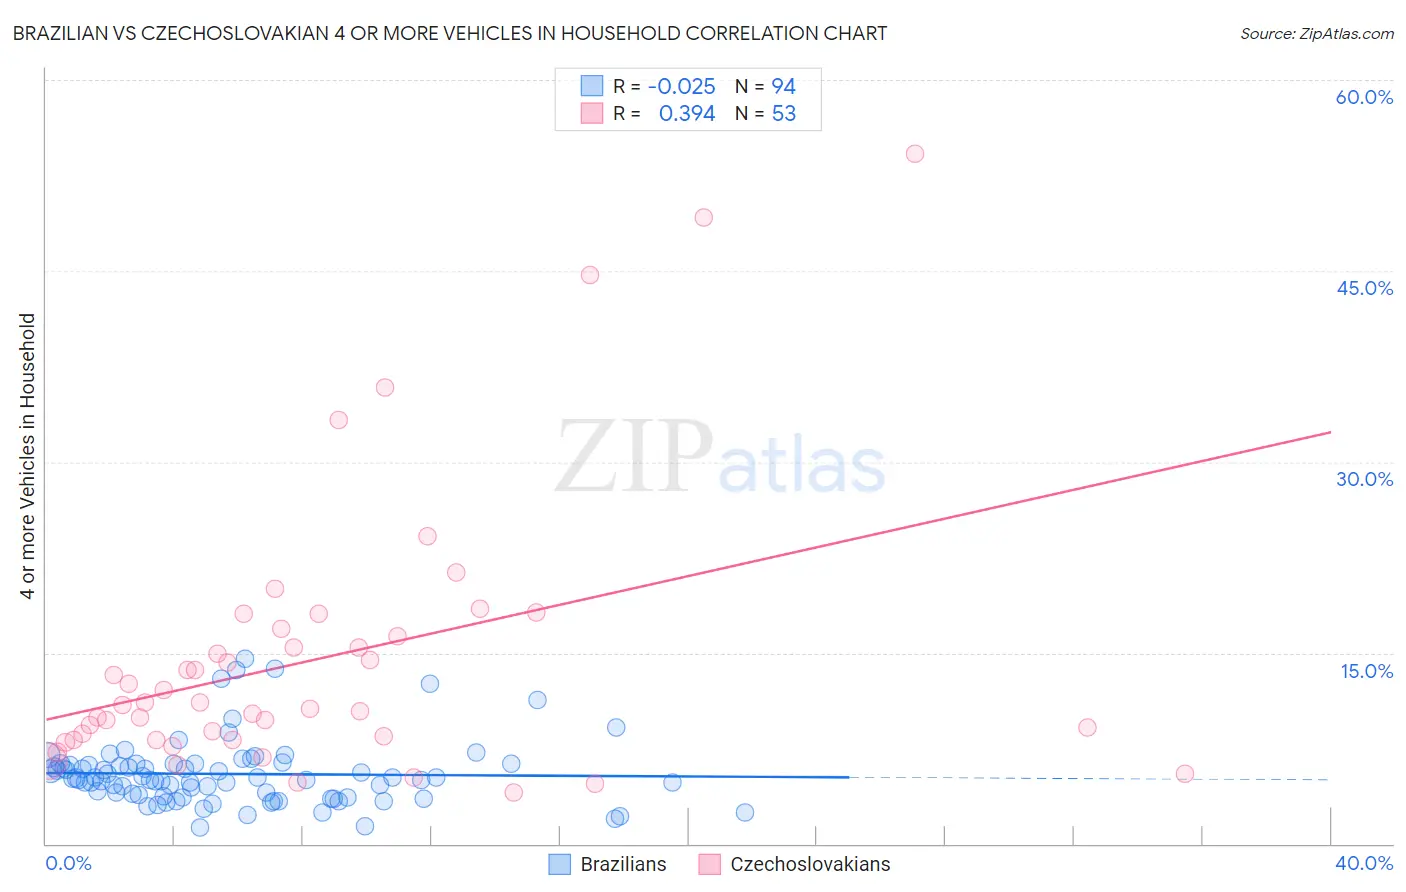 Brazilian vs Czechoslovakian 4 or more Vehicles in Household